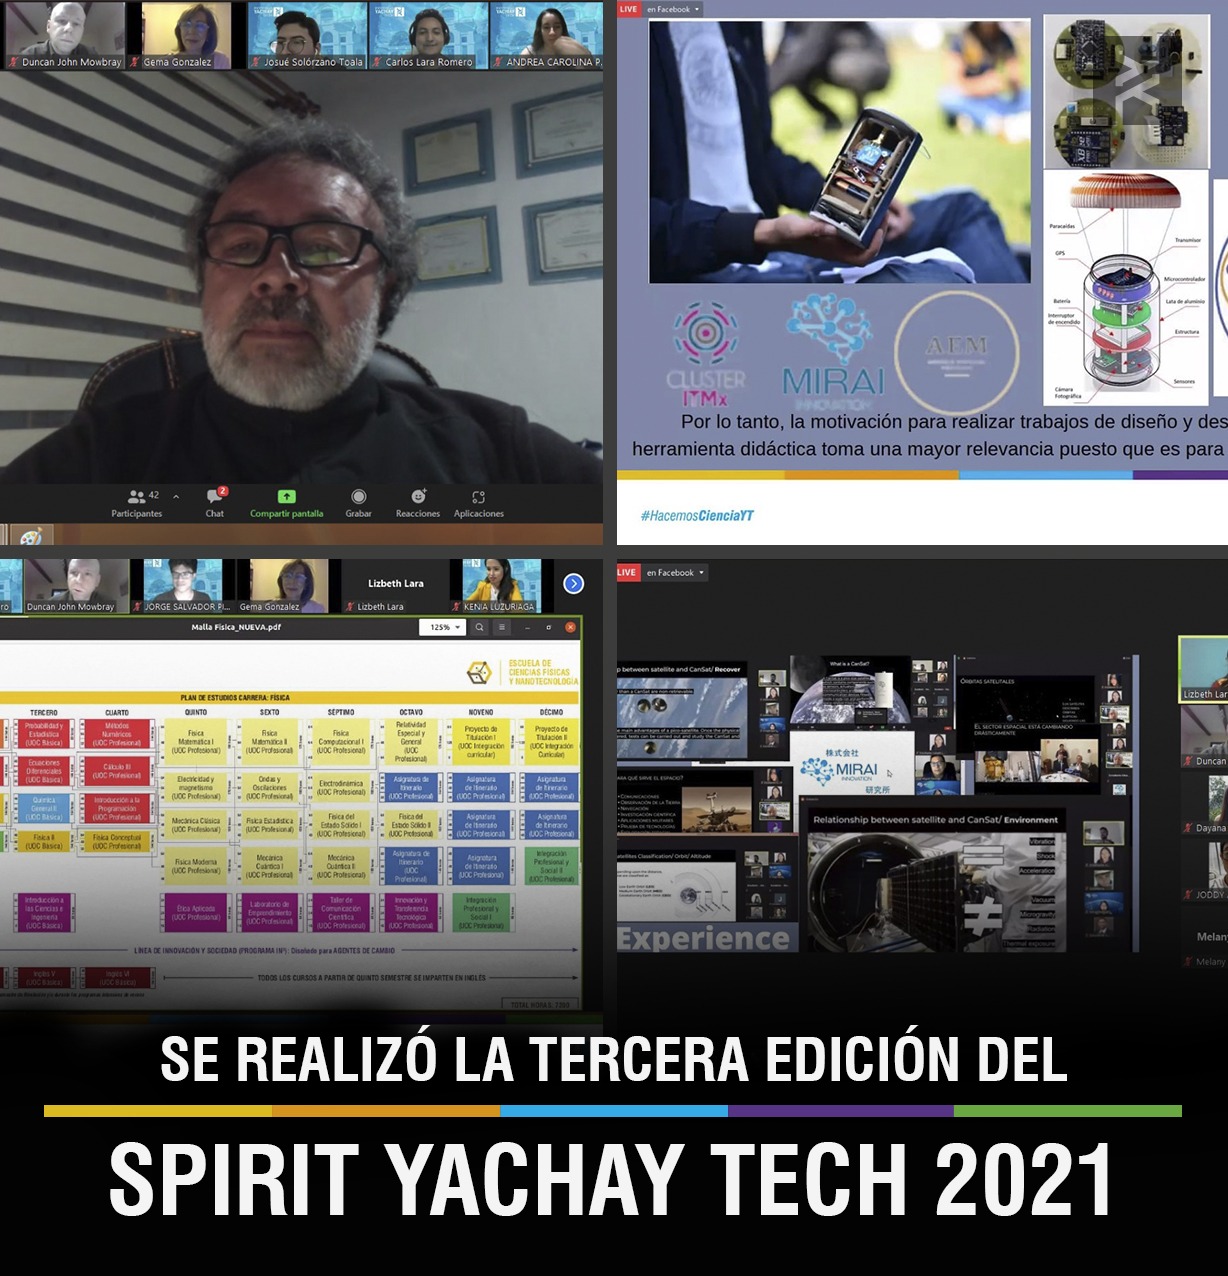 SPIRIT YACHAY TECH 2021 THIRD EDITION